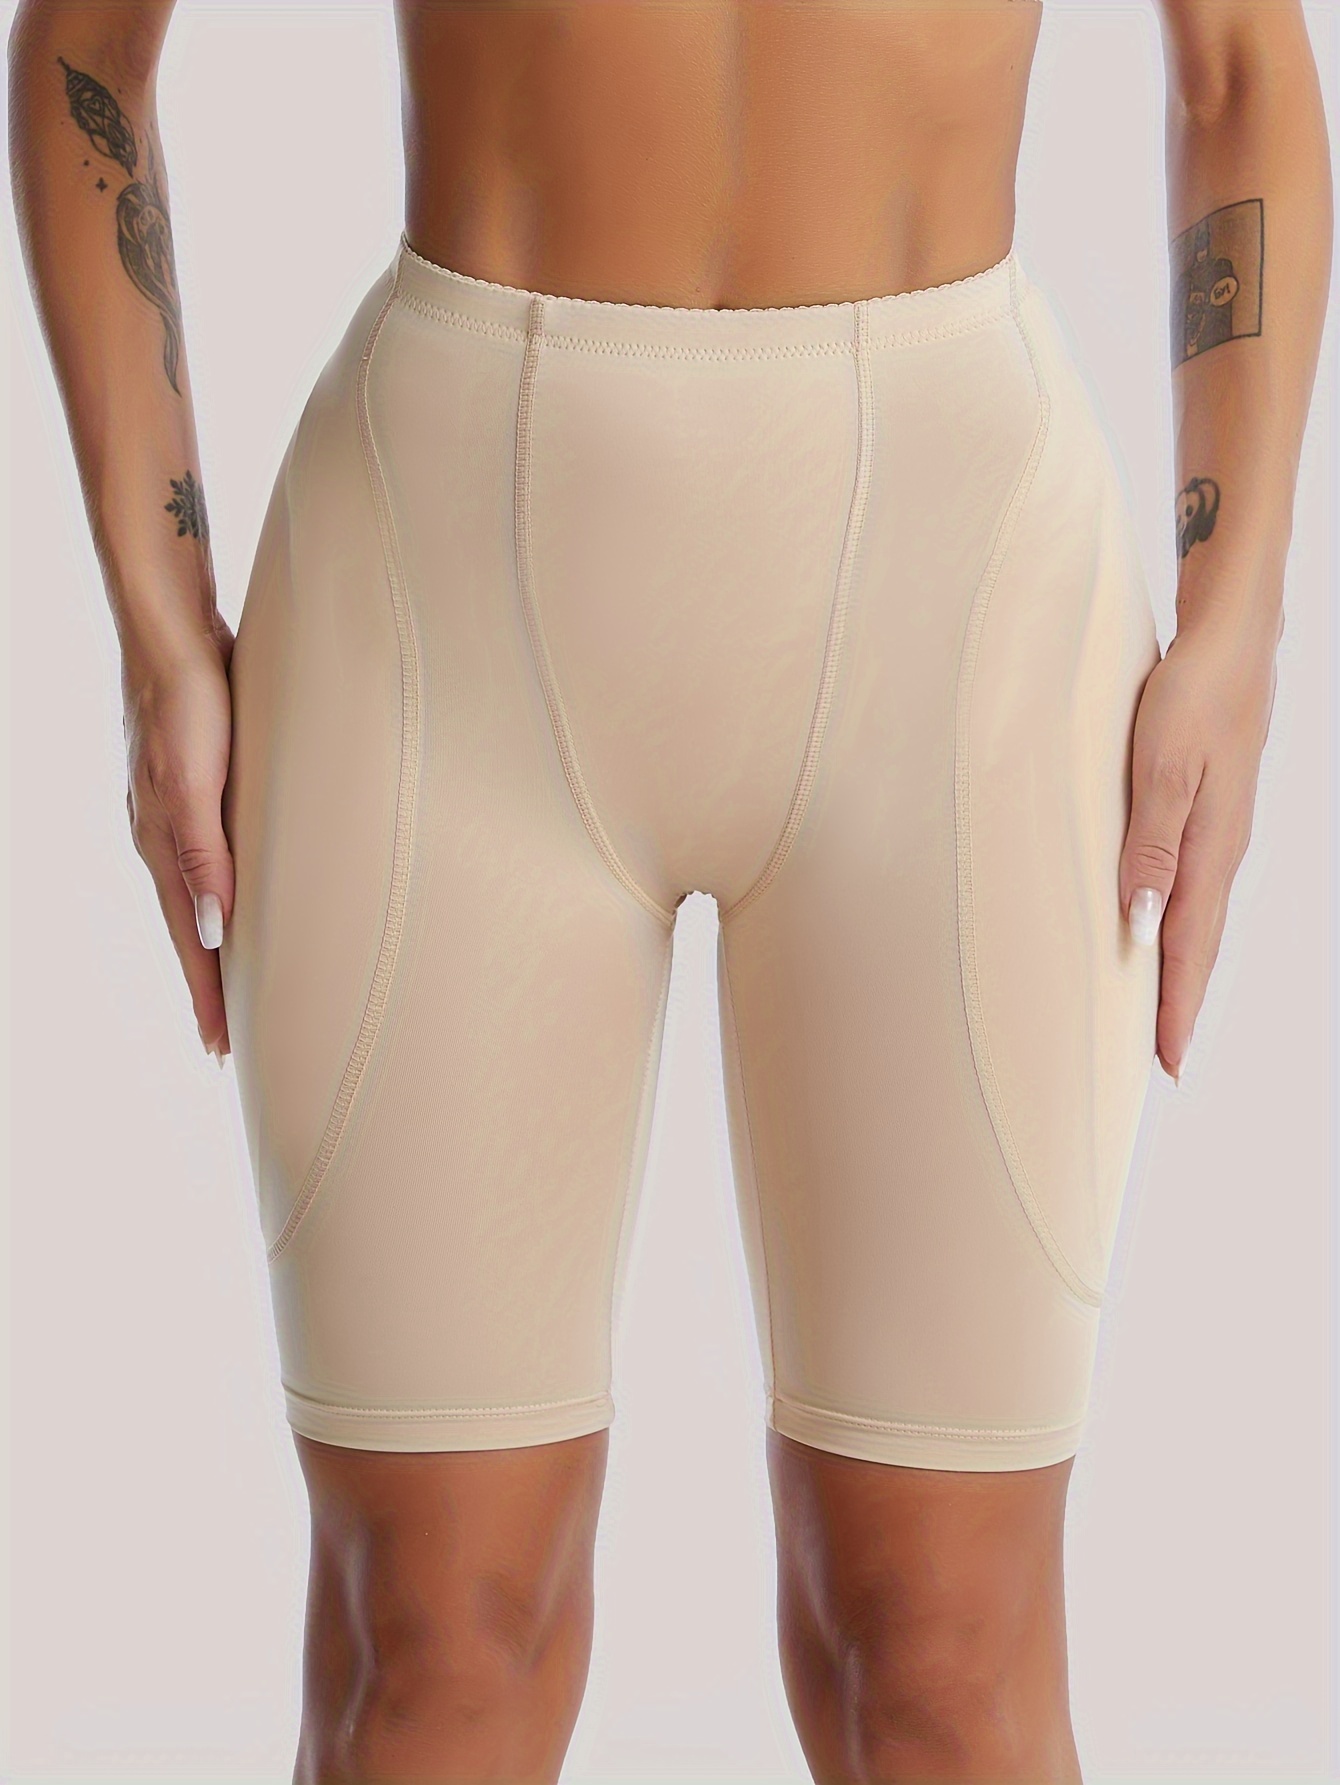 LAZAWG Body Shaper Panties for Women Slimming High Waist Shorts